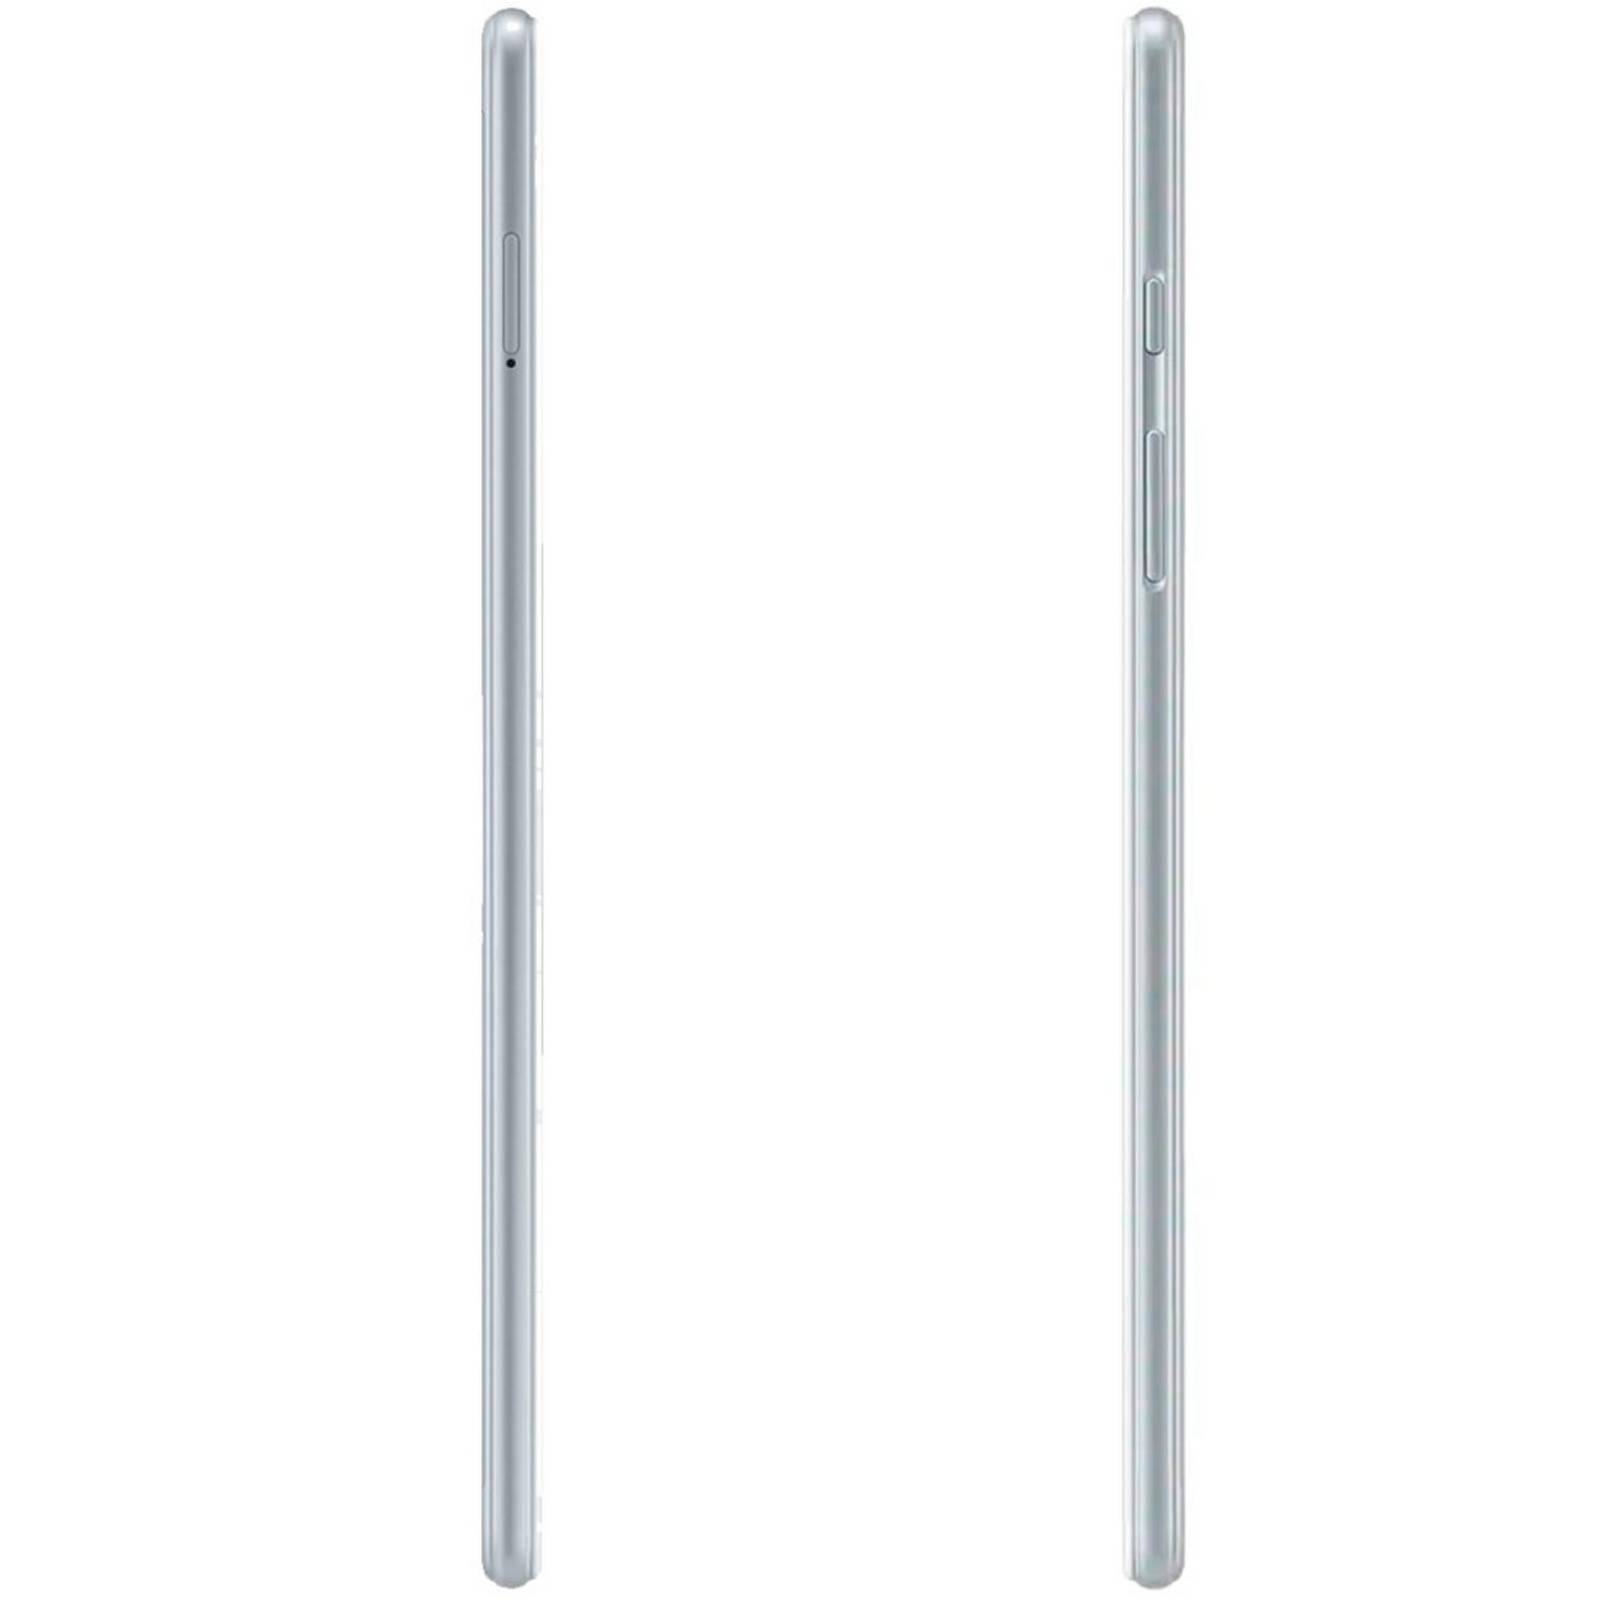 Tablet Galaxy TabA Samsung Sm-t290 2gb 32gb 8 Android 9.0 SM-T290NZSAM 